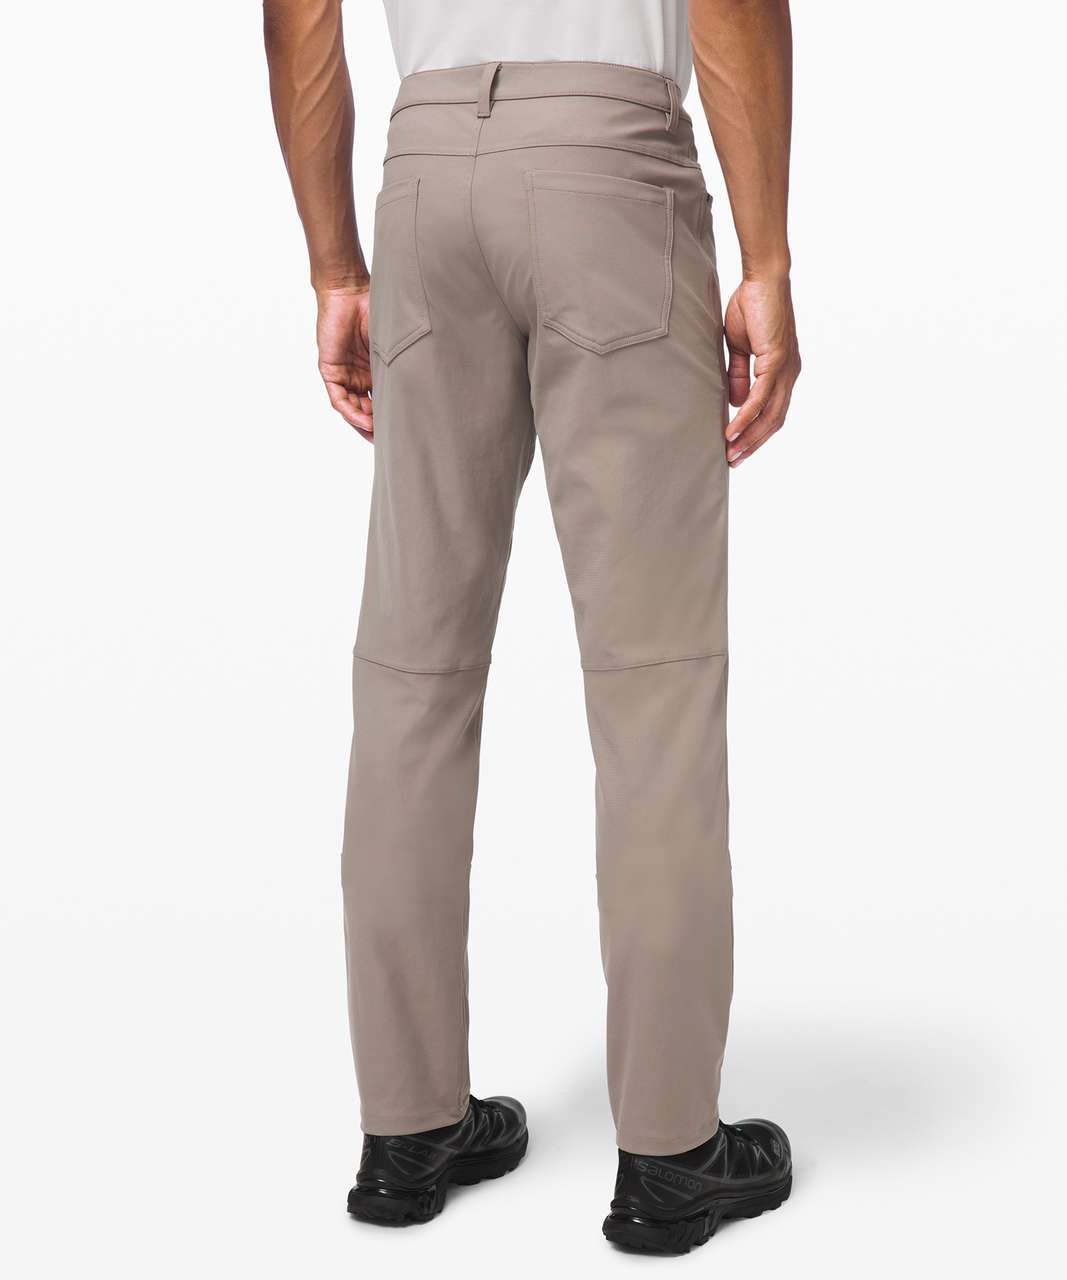 Carbon Comfort Chino Pants – True Classic